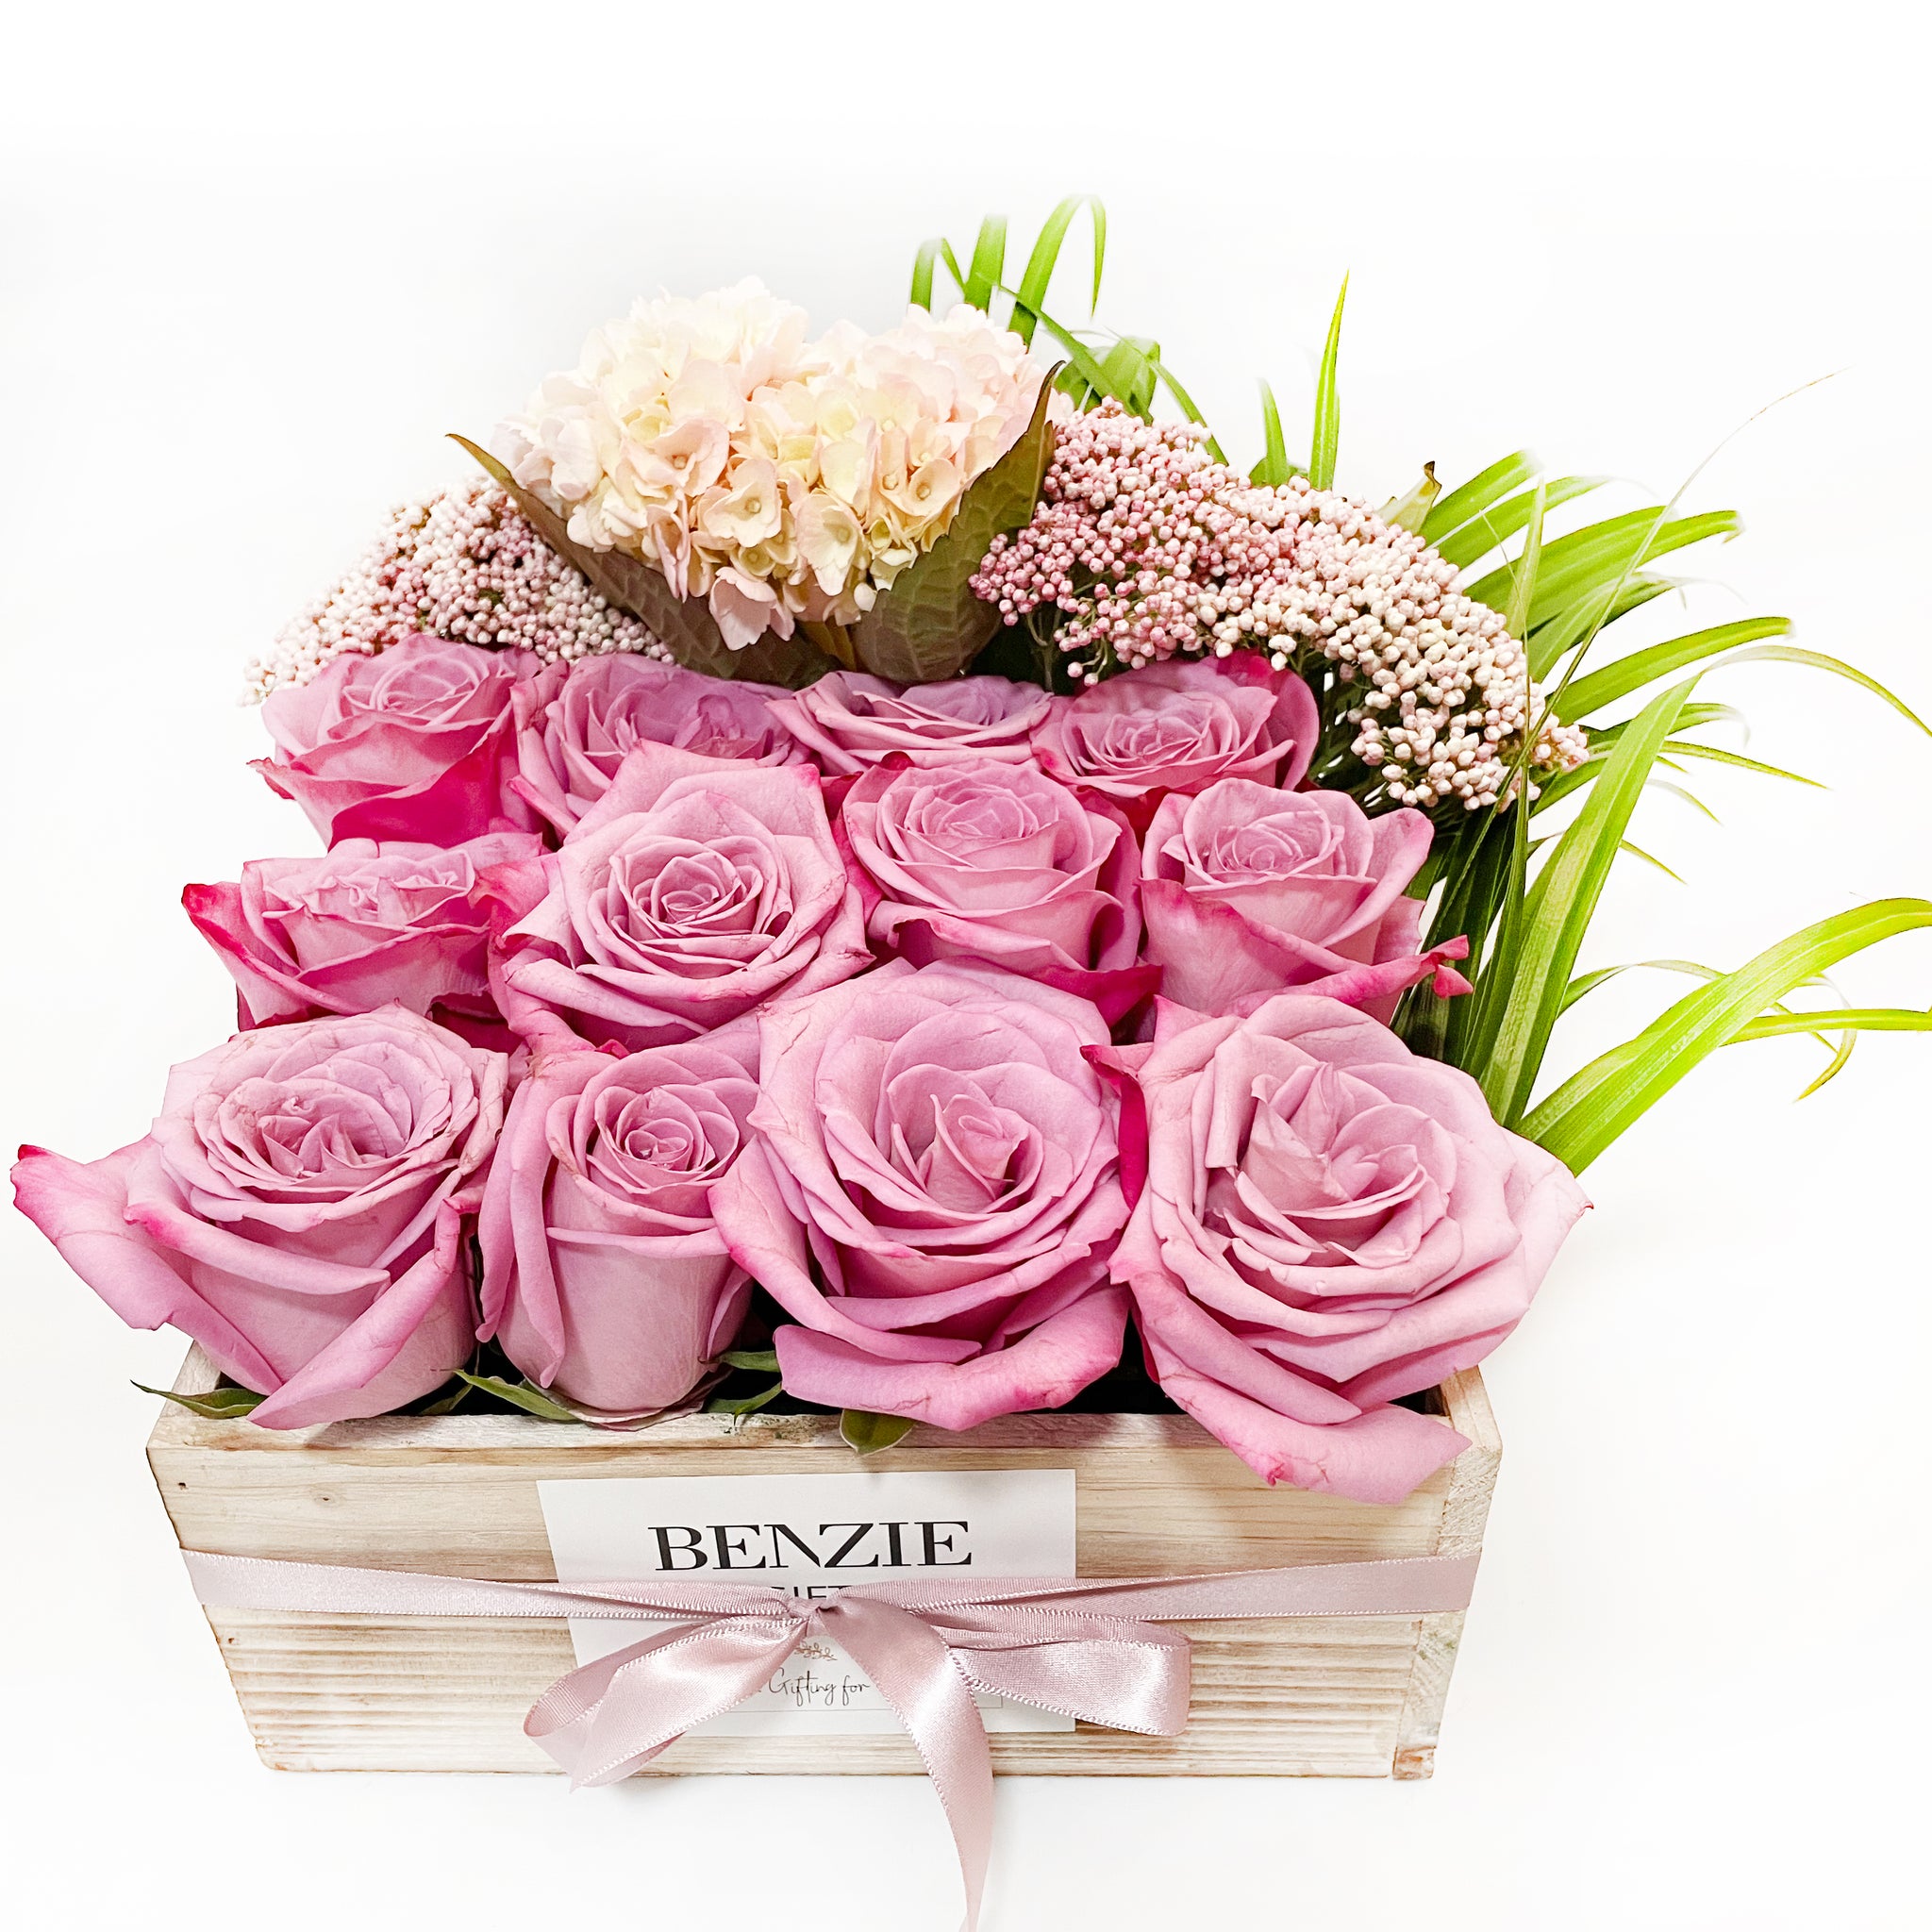 Fresh Spring Bouquet - Benzie Gifts